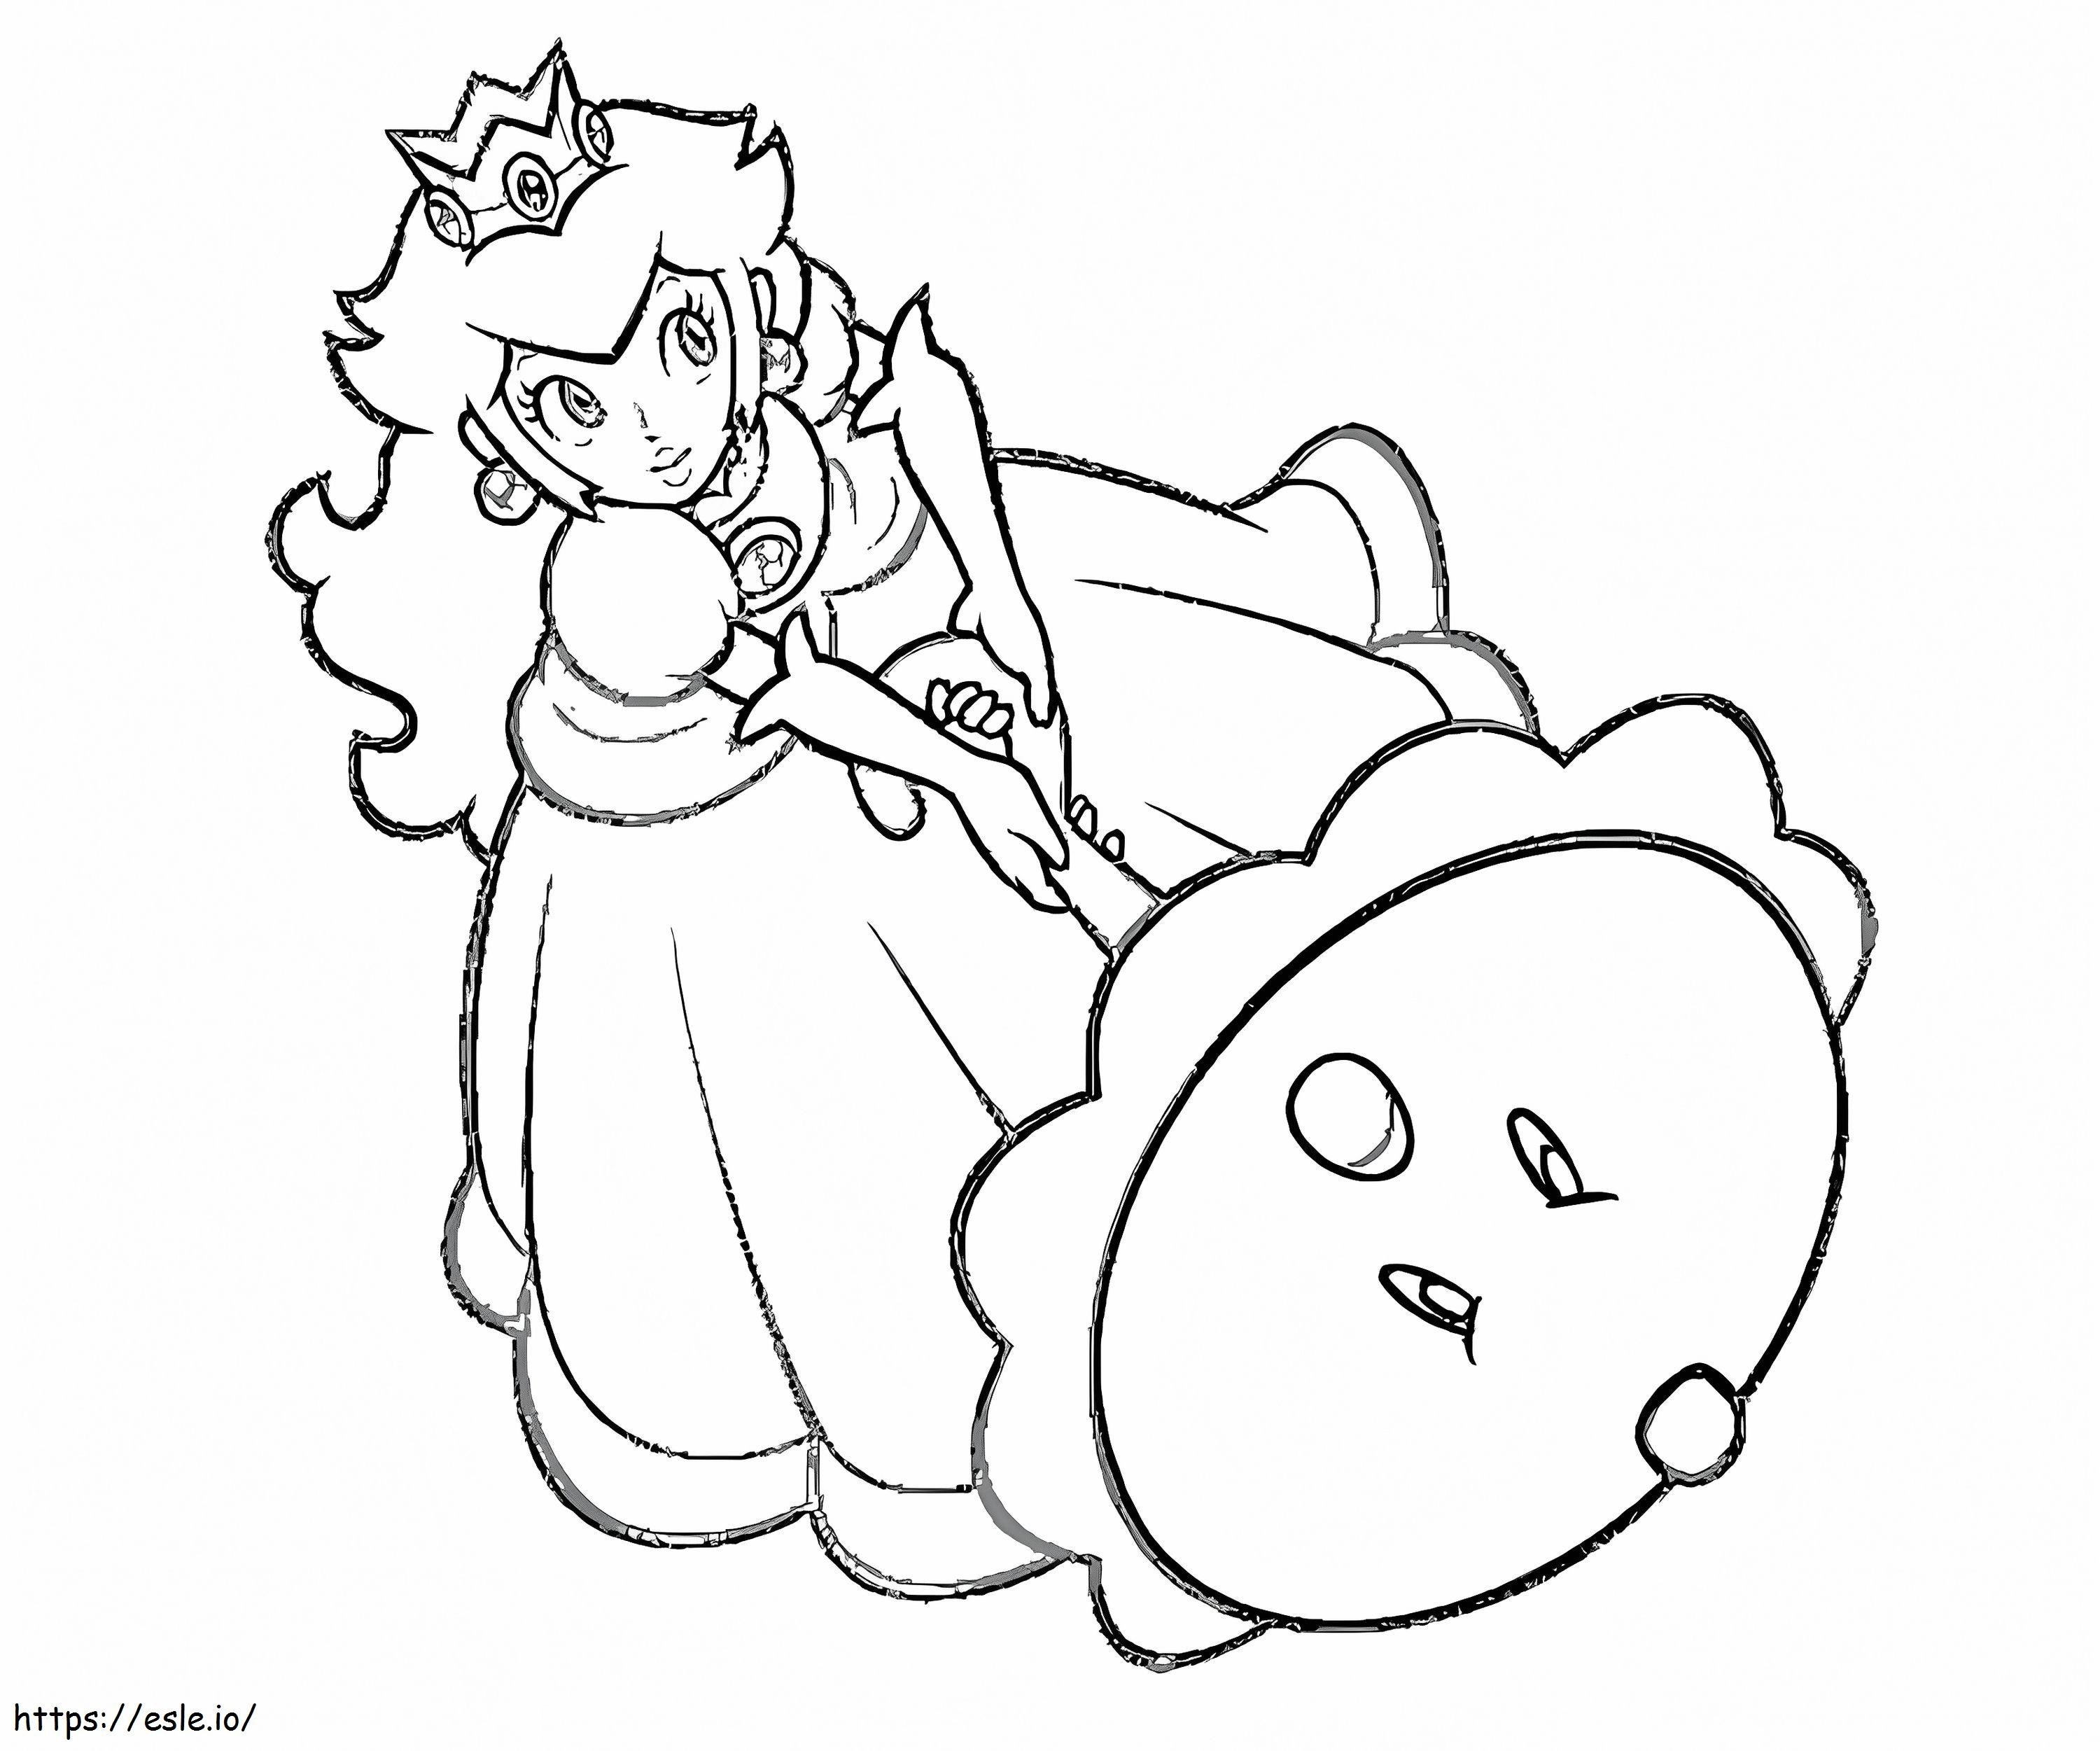 Big Princess Peach coloring page